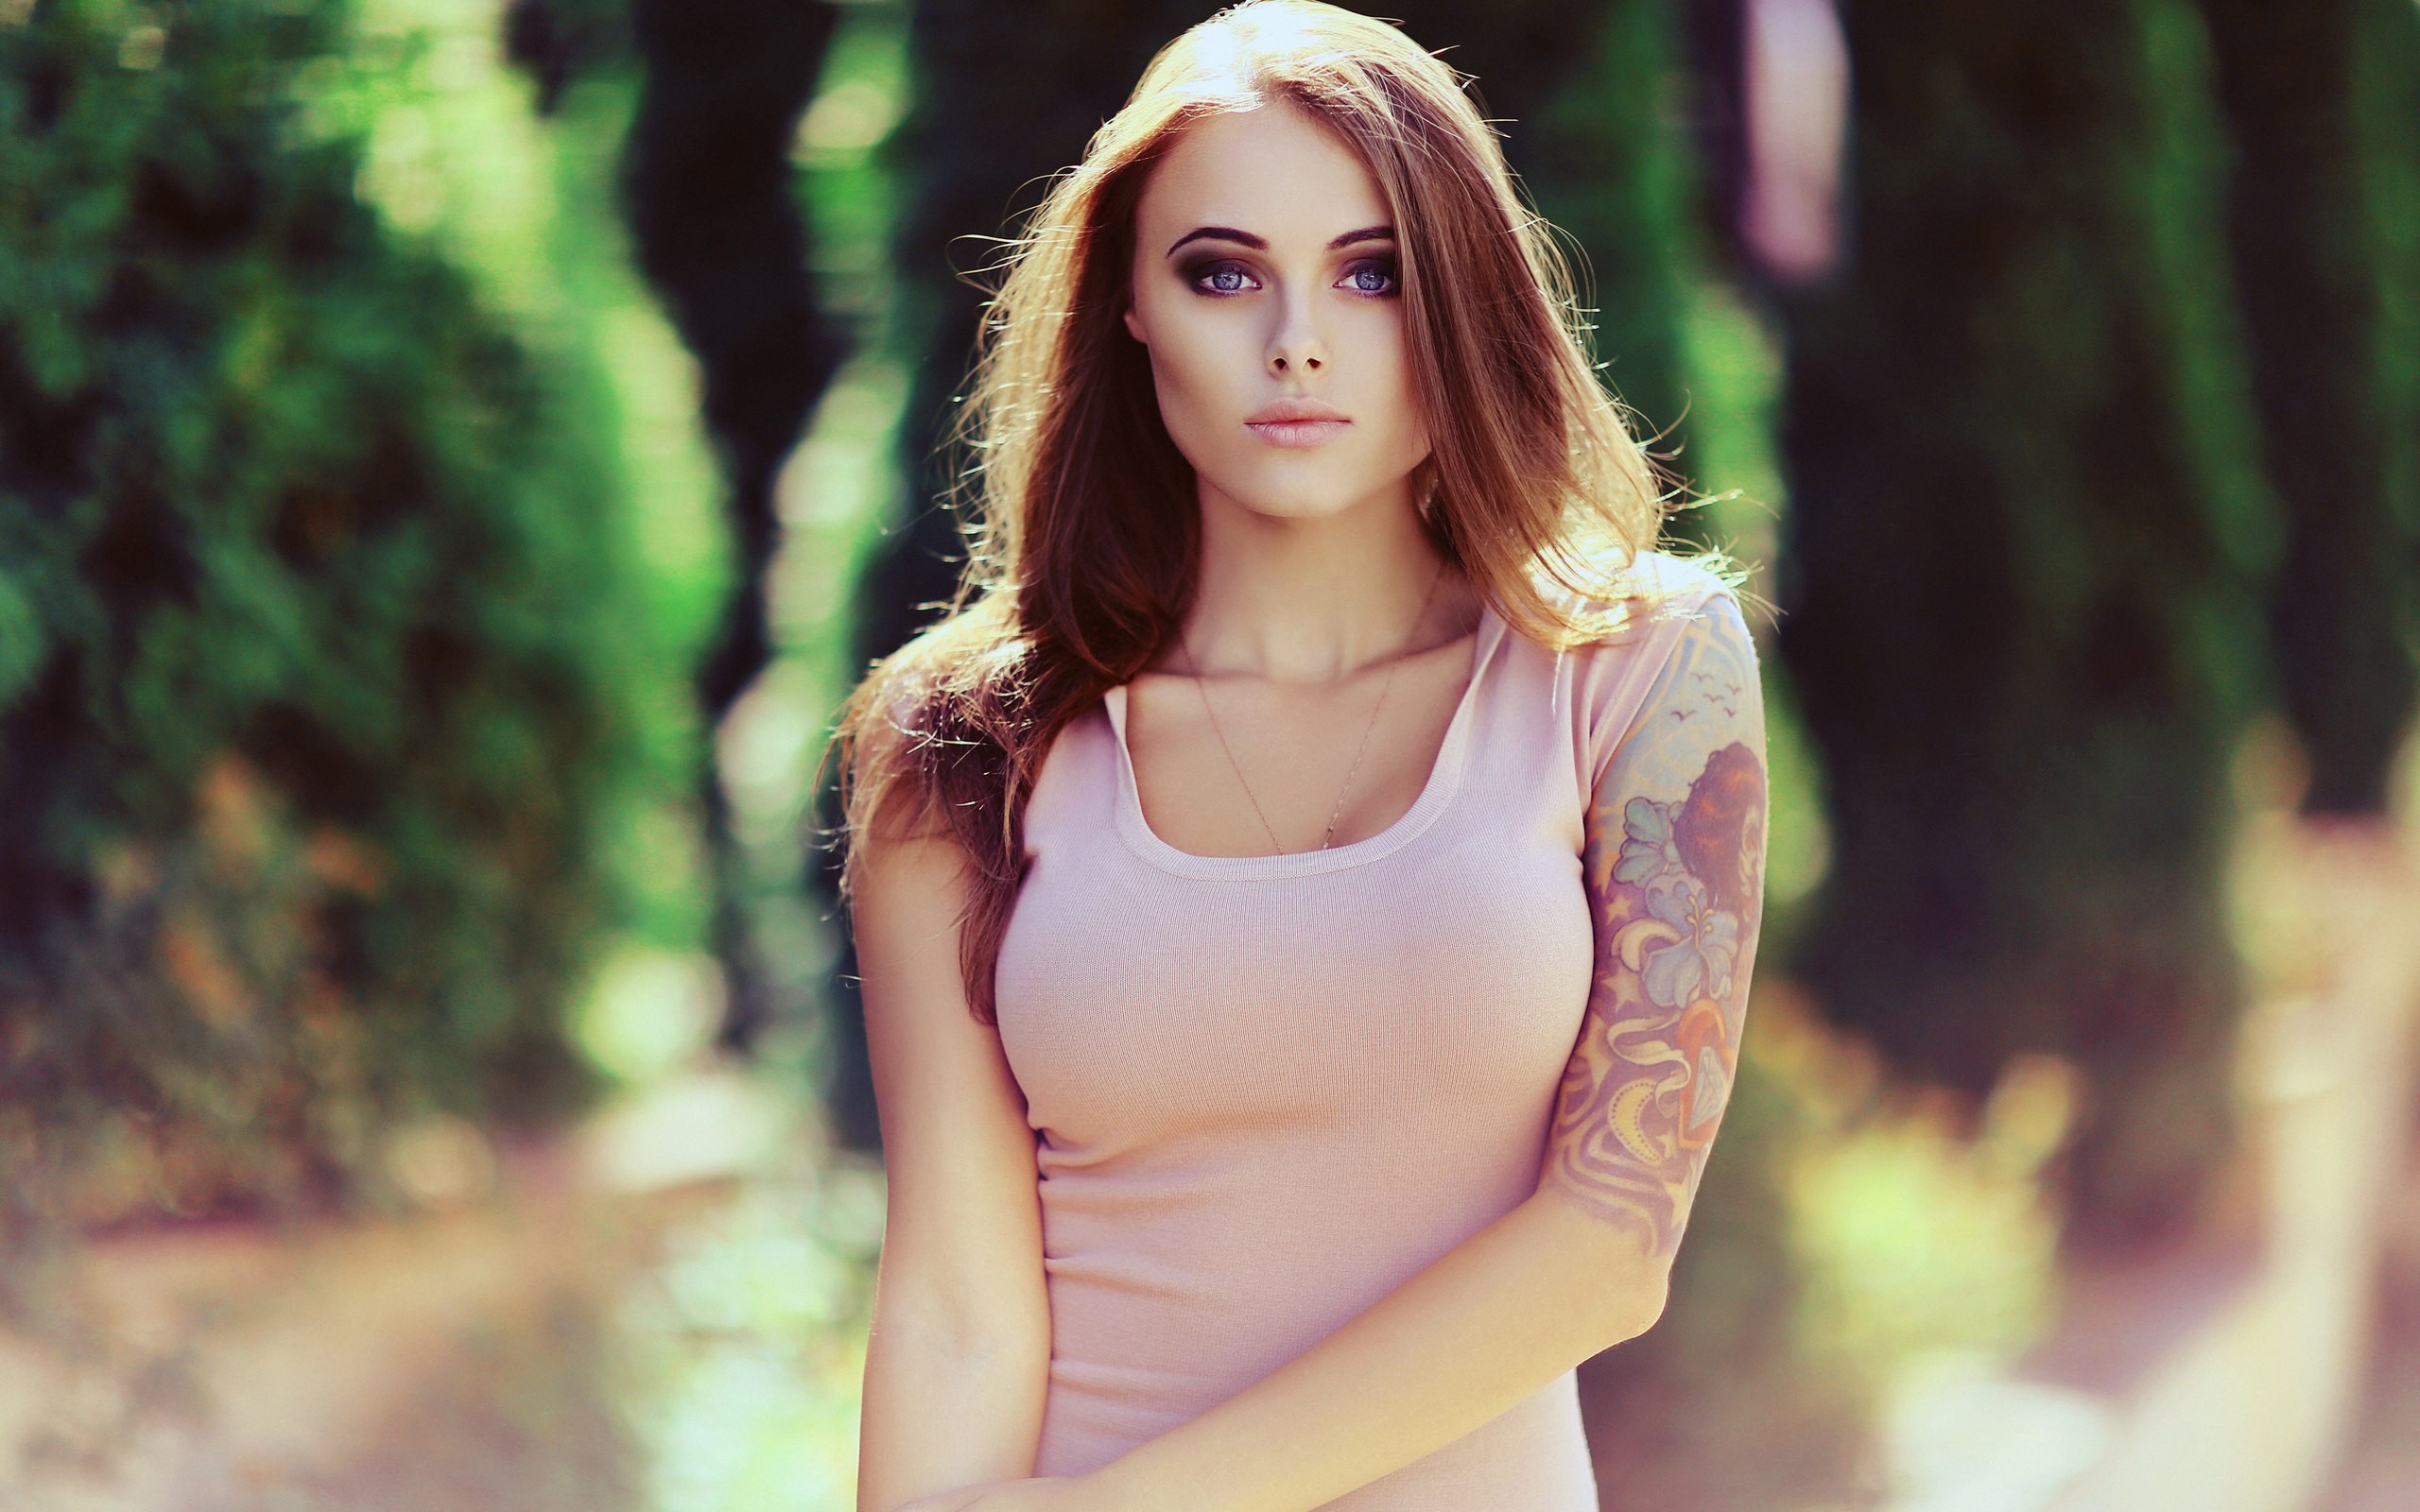 Stylish Girl With Tattoo - Hot Girl - HD Wallpaper 